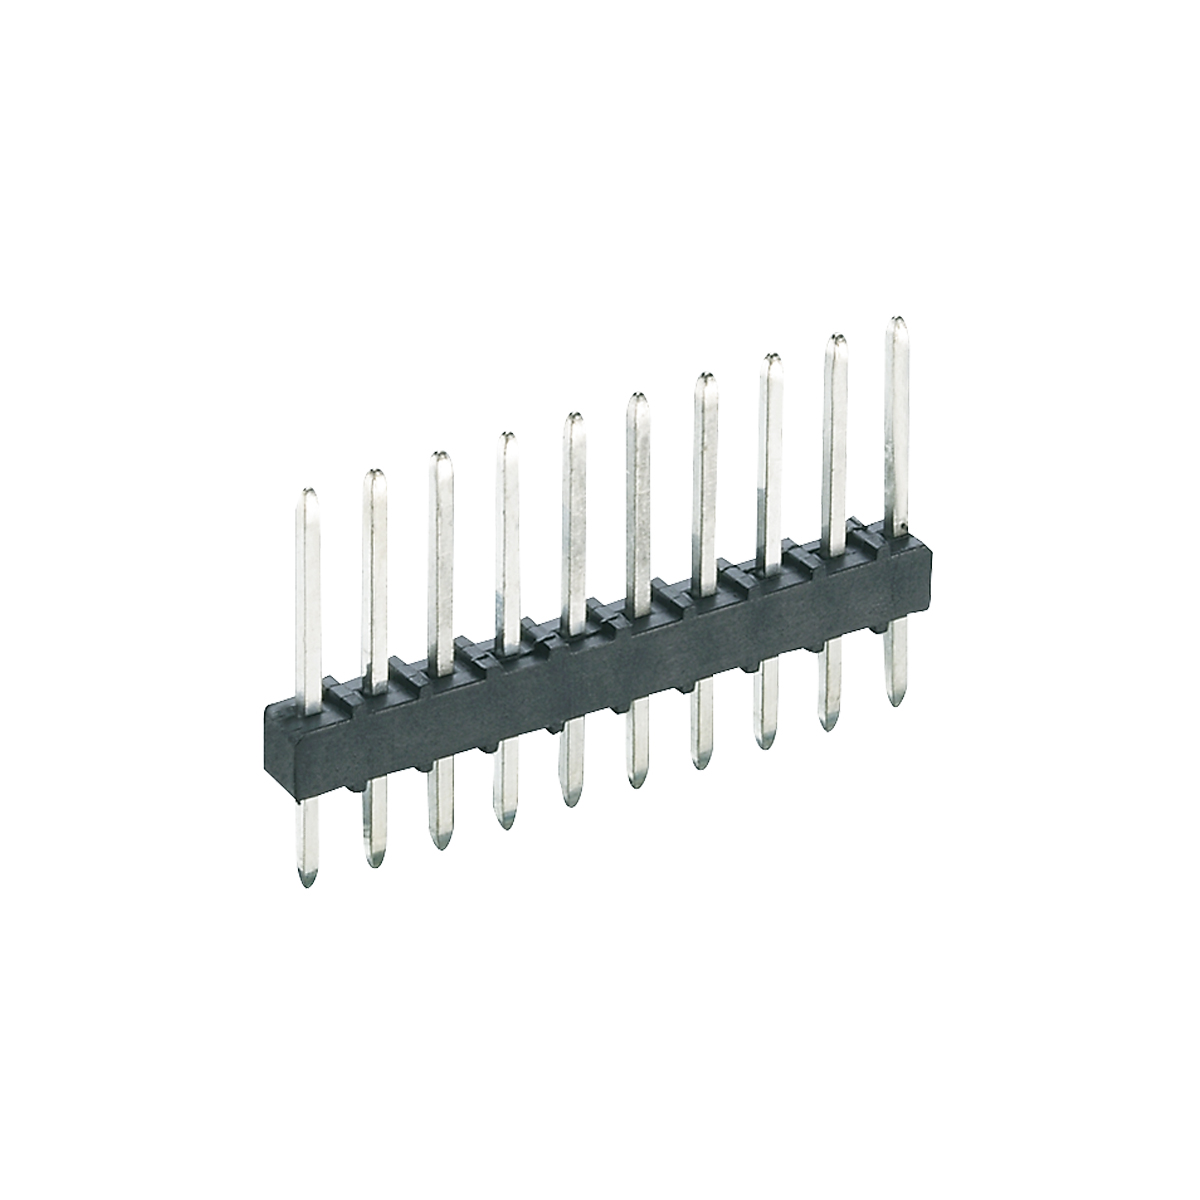 Lumberg: 2,5 MS (Series 31 | Minimodul™ connectors, pitch 2.5 mm)